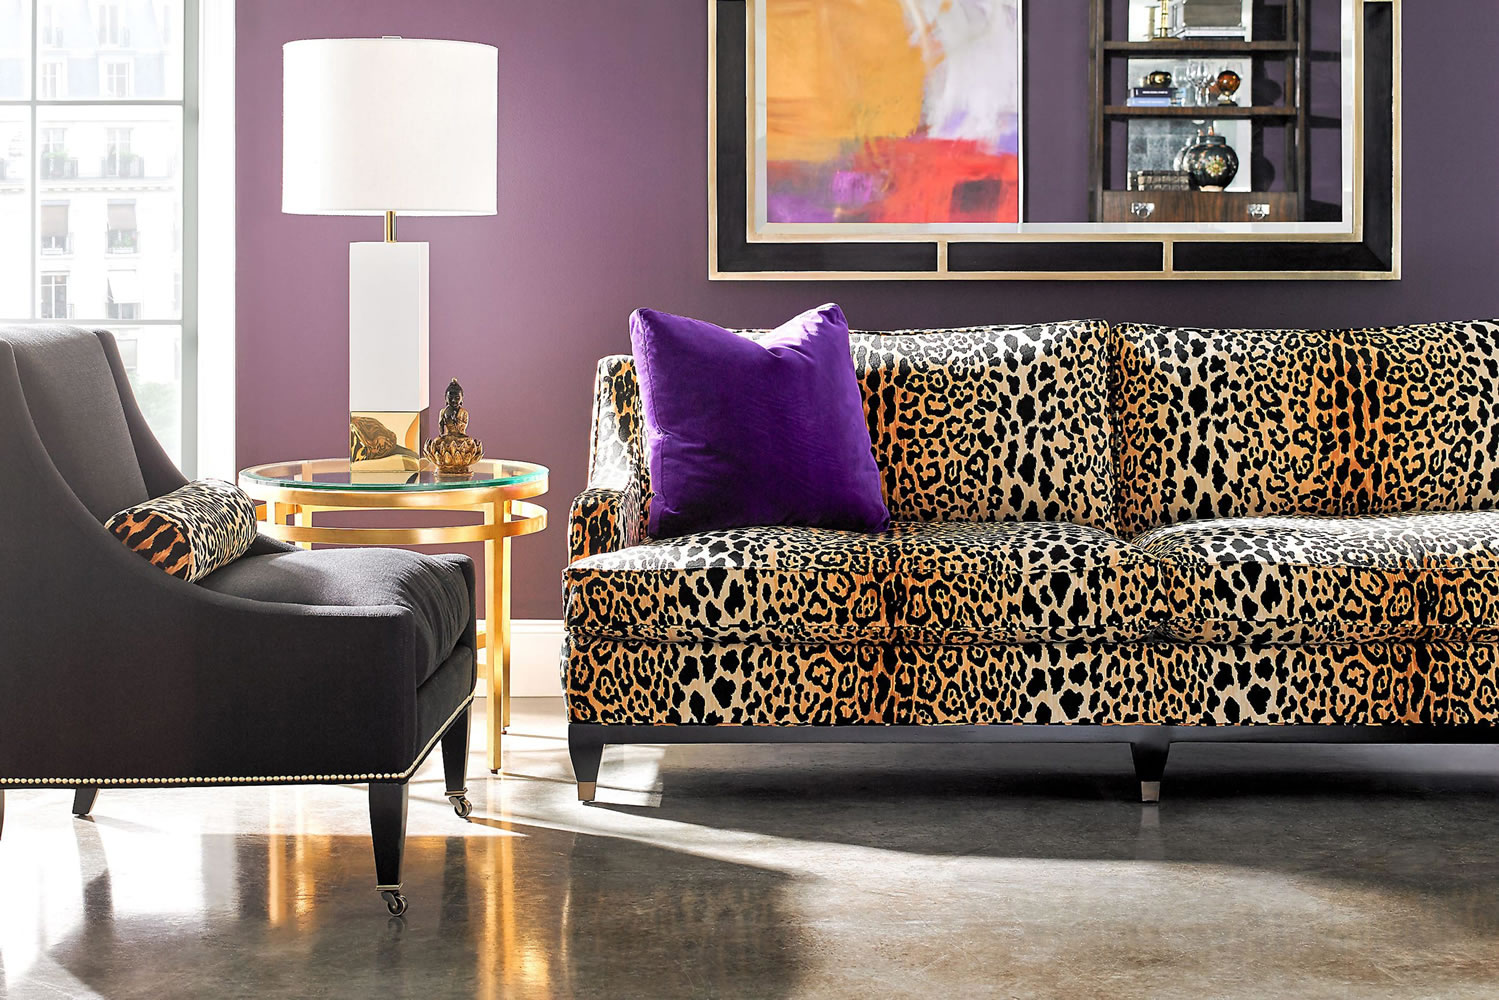 Leopard, Leopard Decor, Leopard Print, Leaves, Decorative Pillows, Mom  Gift, Home Decor, Room Decor, Bedroom Decor